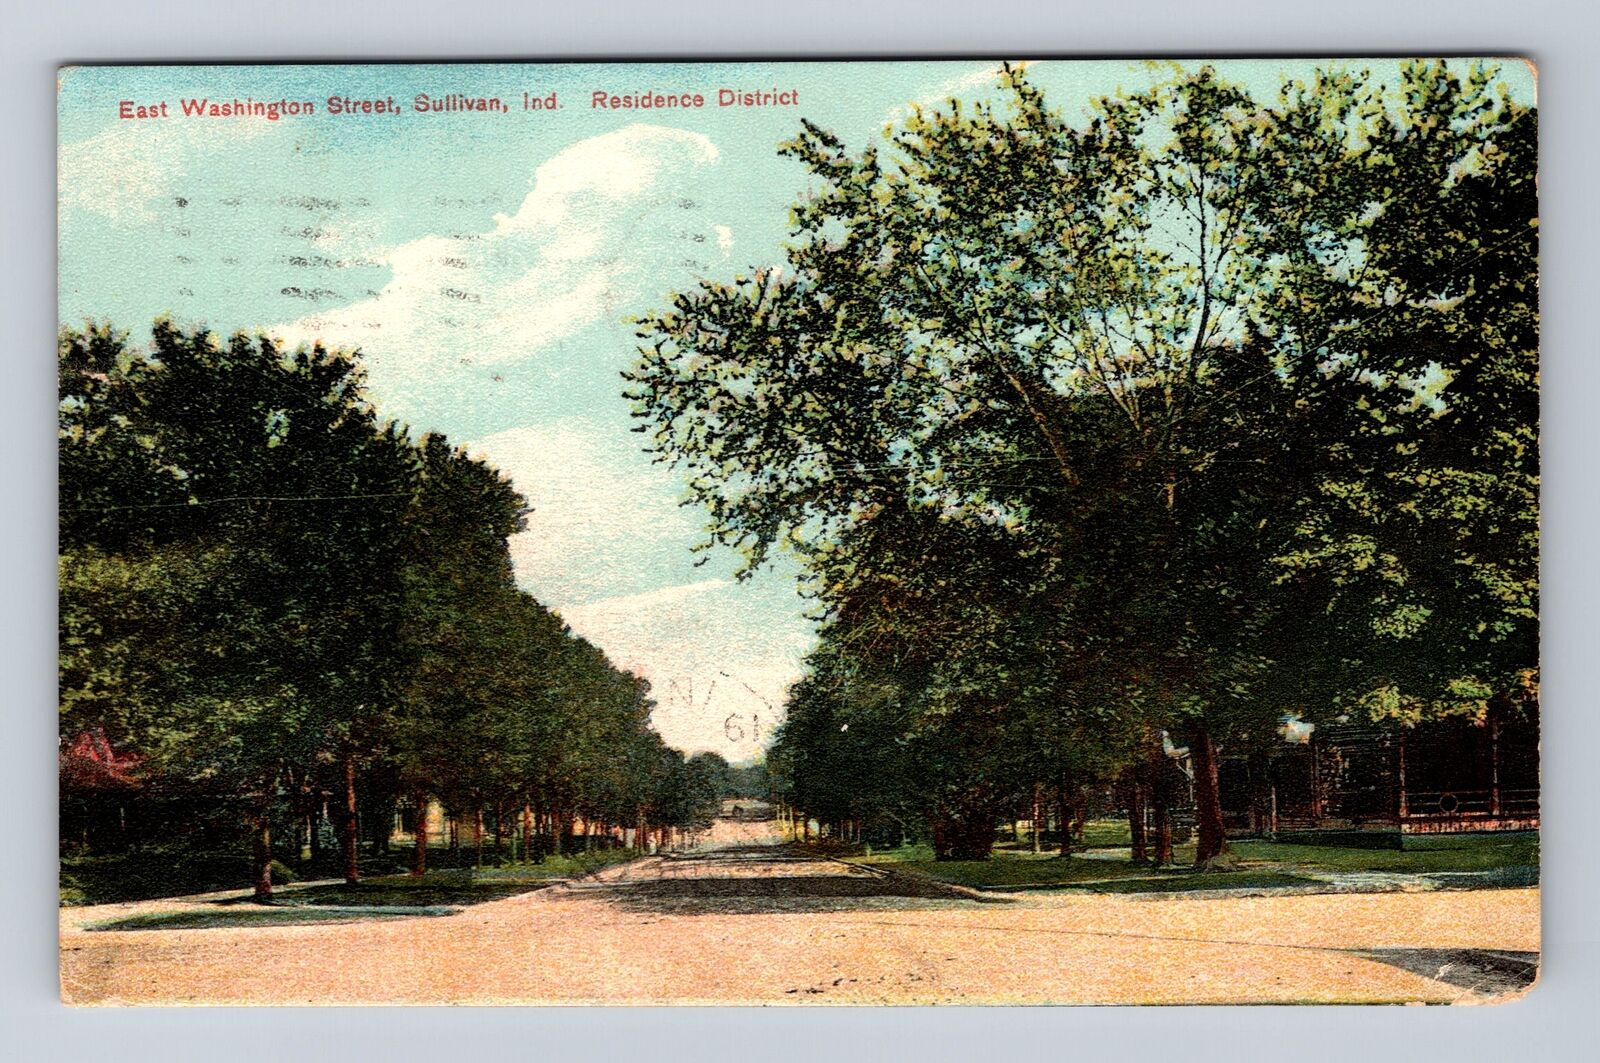 Sullivan IN-Indiana, Residential District E Washington Street Vintage Postcard